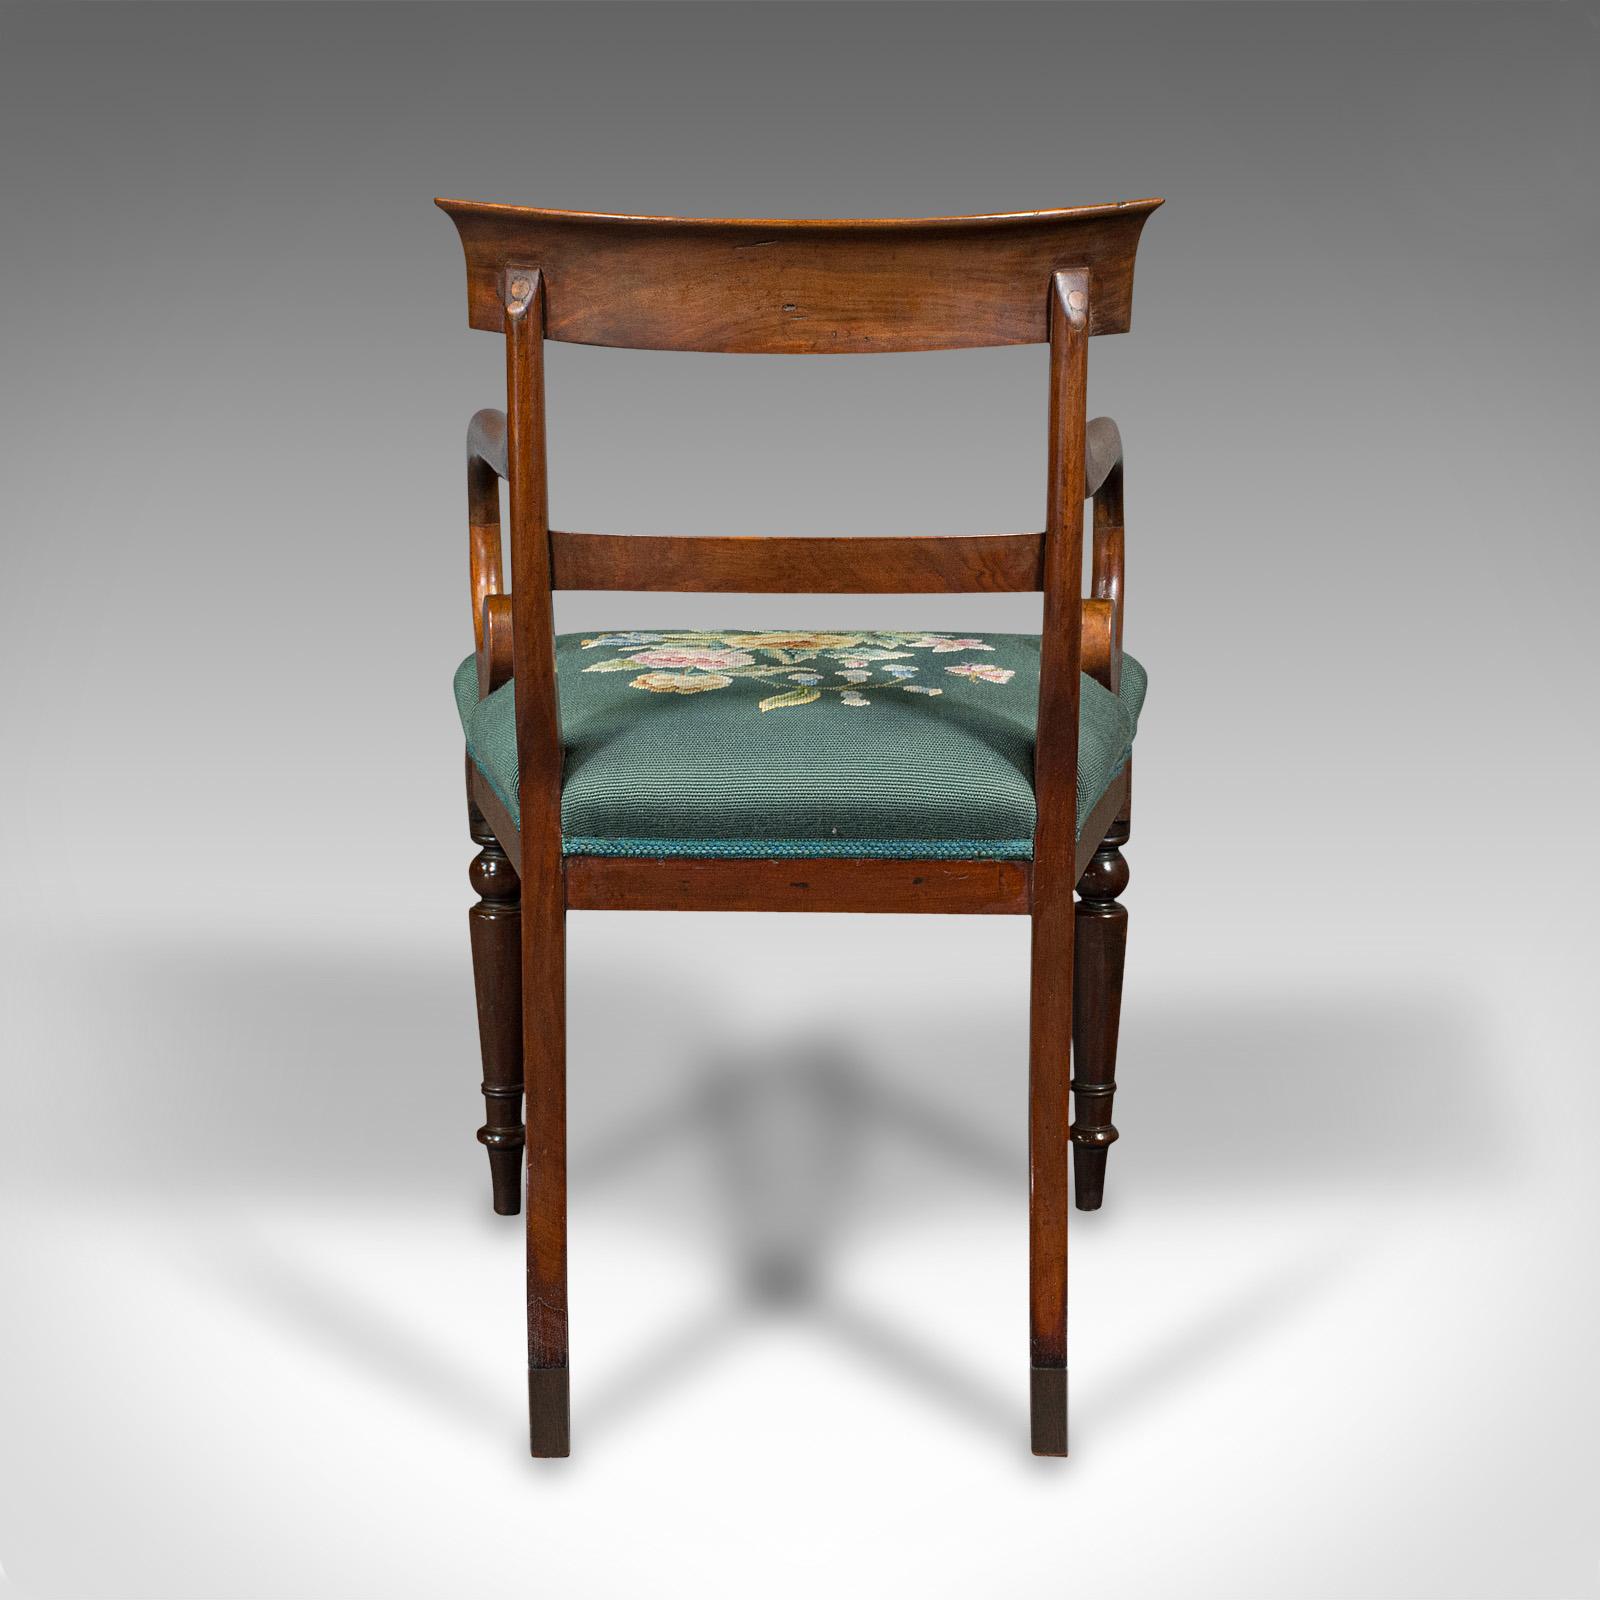 19th Century Antique Scroll Arm Desk Chair, English, Armchair, Needlepoint, Regency, C.1820